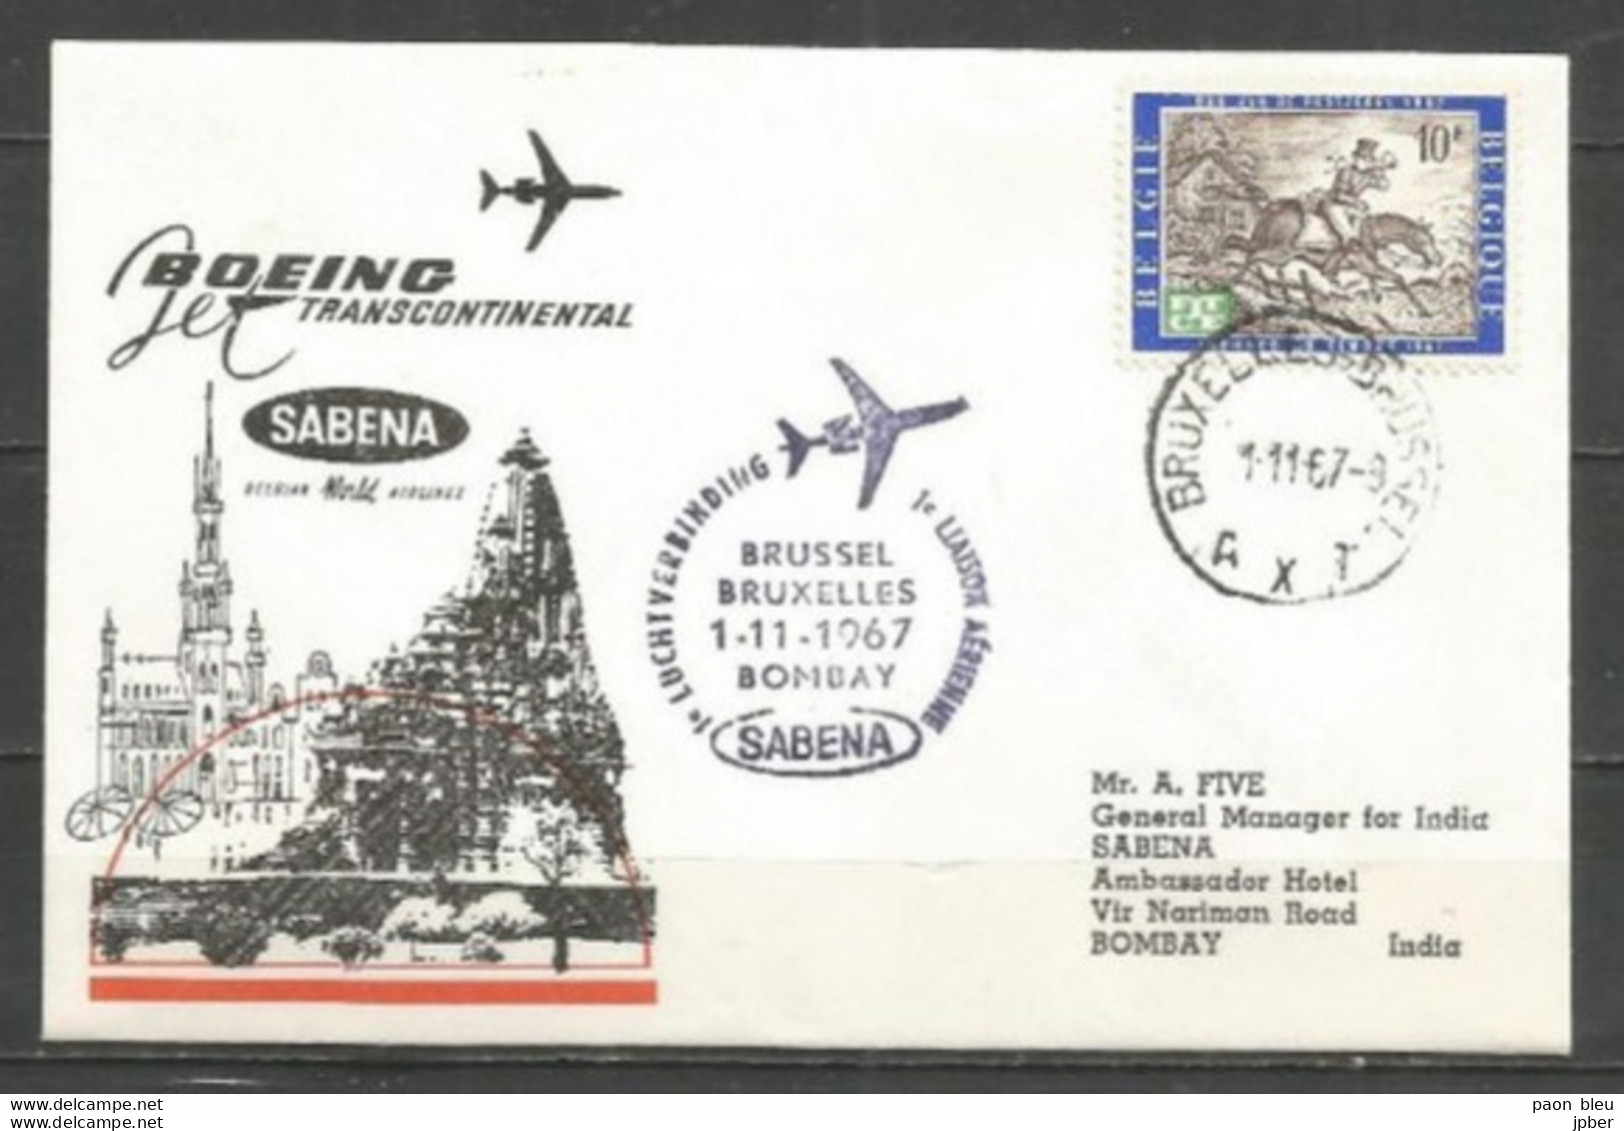 BRUXELLES-BOMBAY 1-11-1967 - Sabena Boeing - Timbres Belgique Postillon - Avions